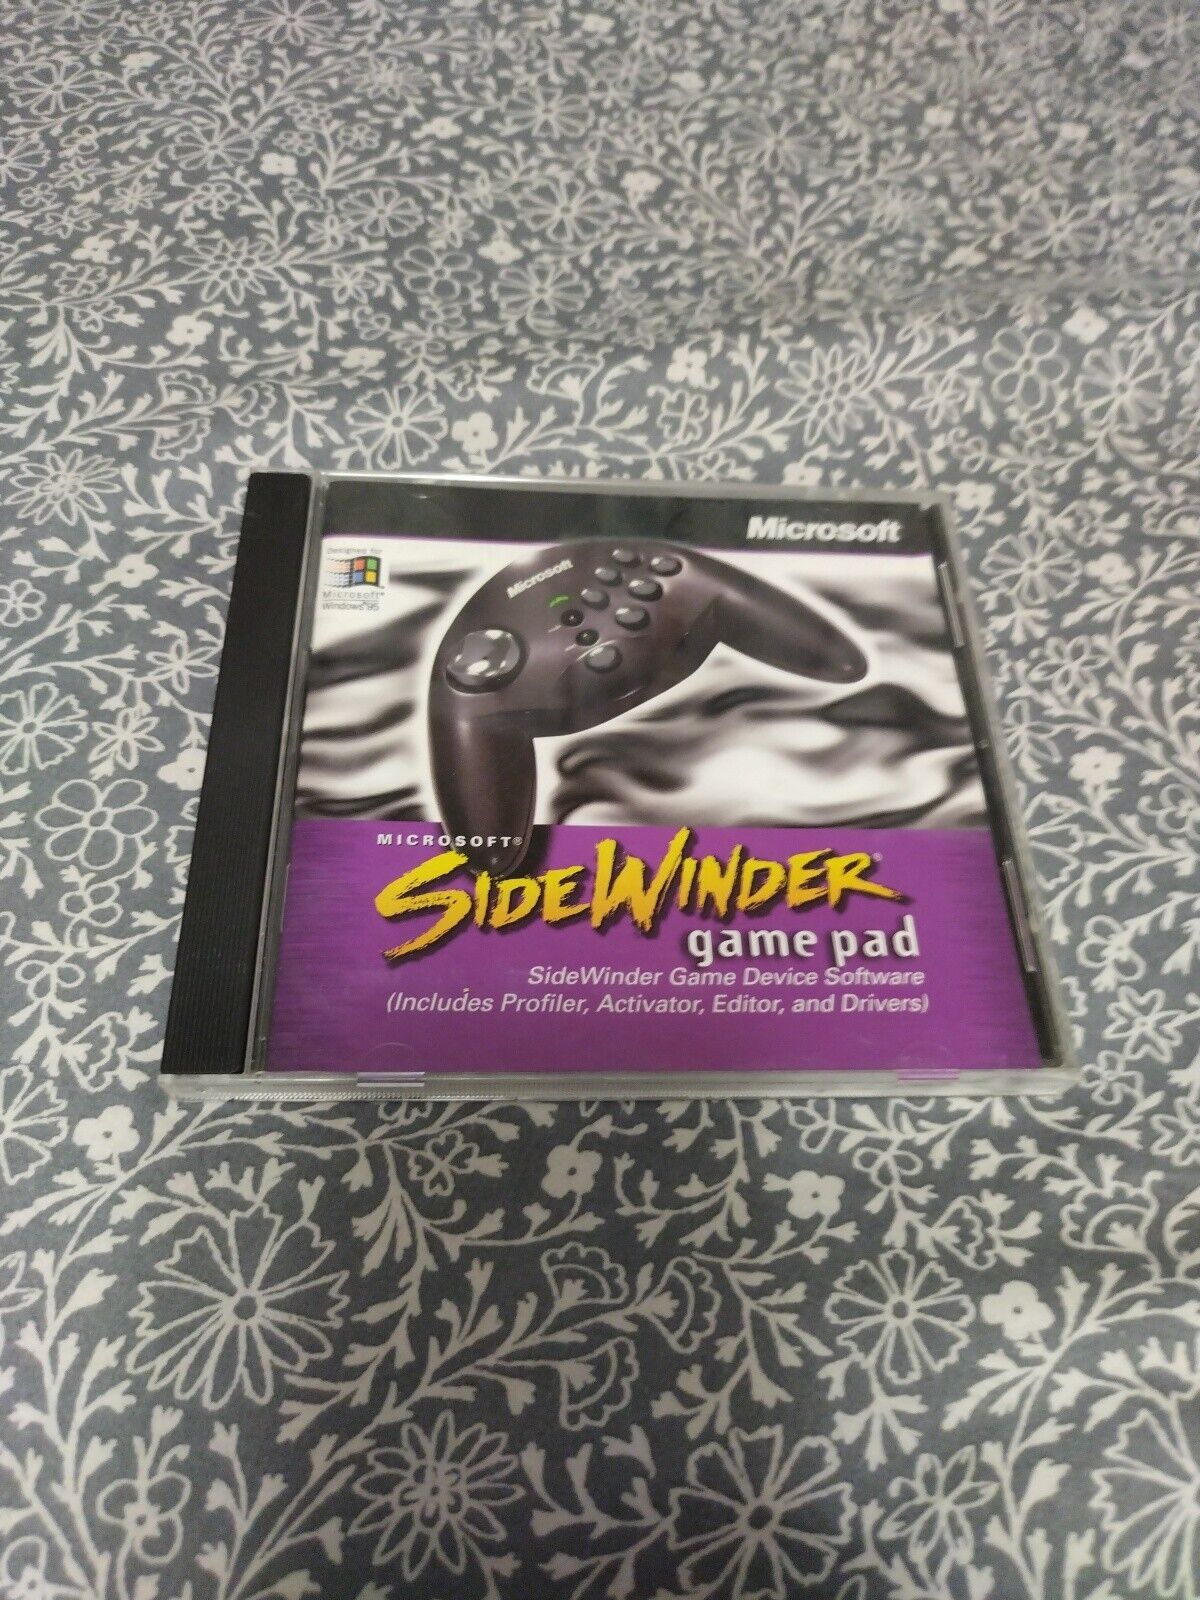 Microsoft SideWinder Game Pad Pro Game PC Cd Rom Device Software. Windows 98